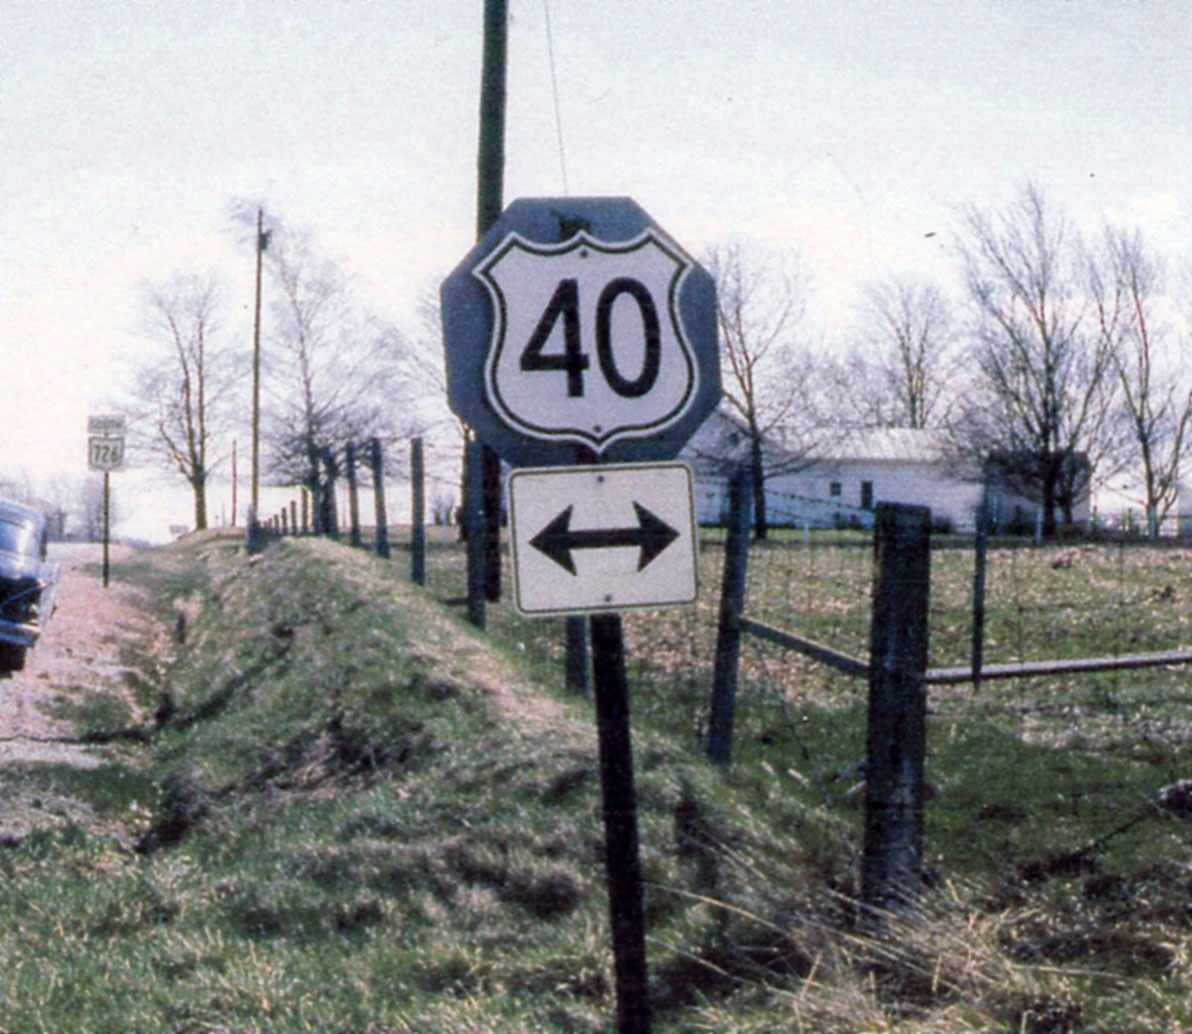 Ohio - State Highway 726 and U.S. Highway 40 sign.